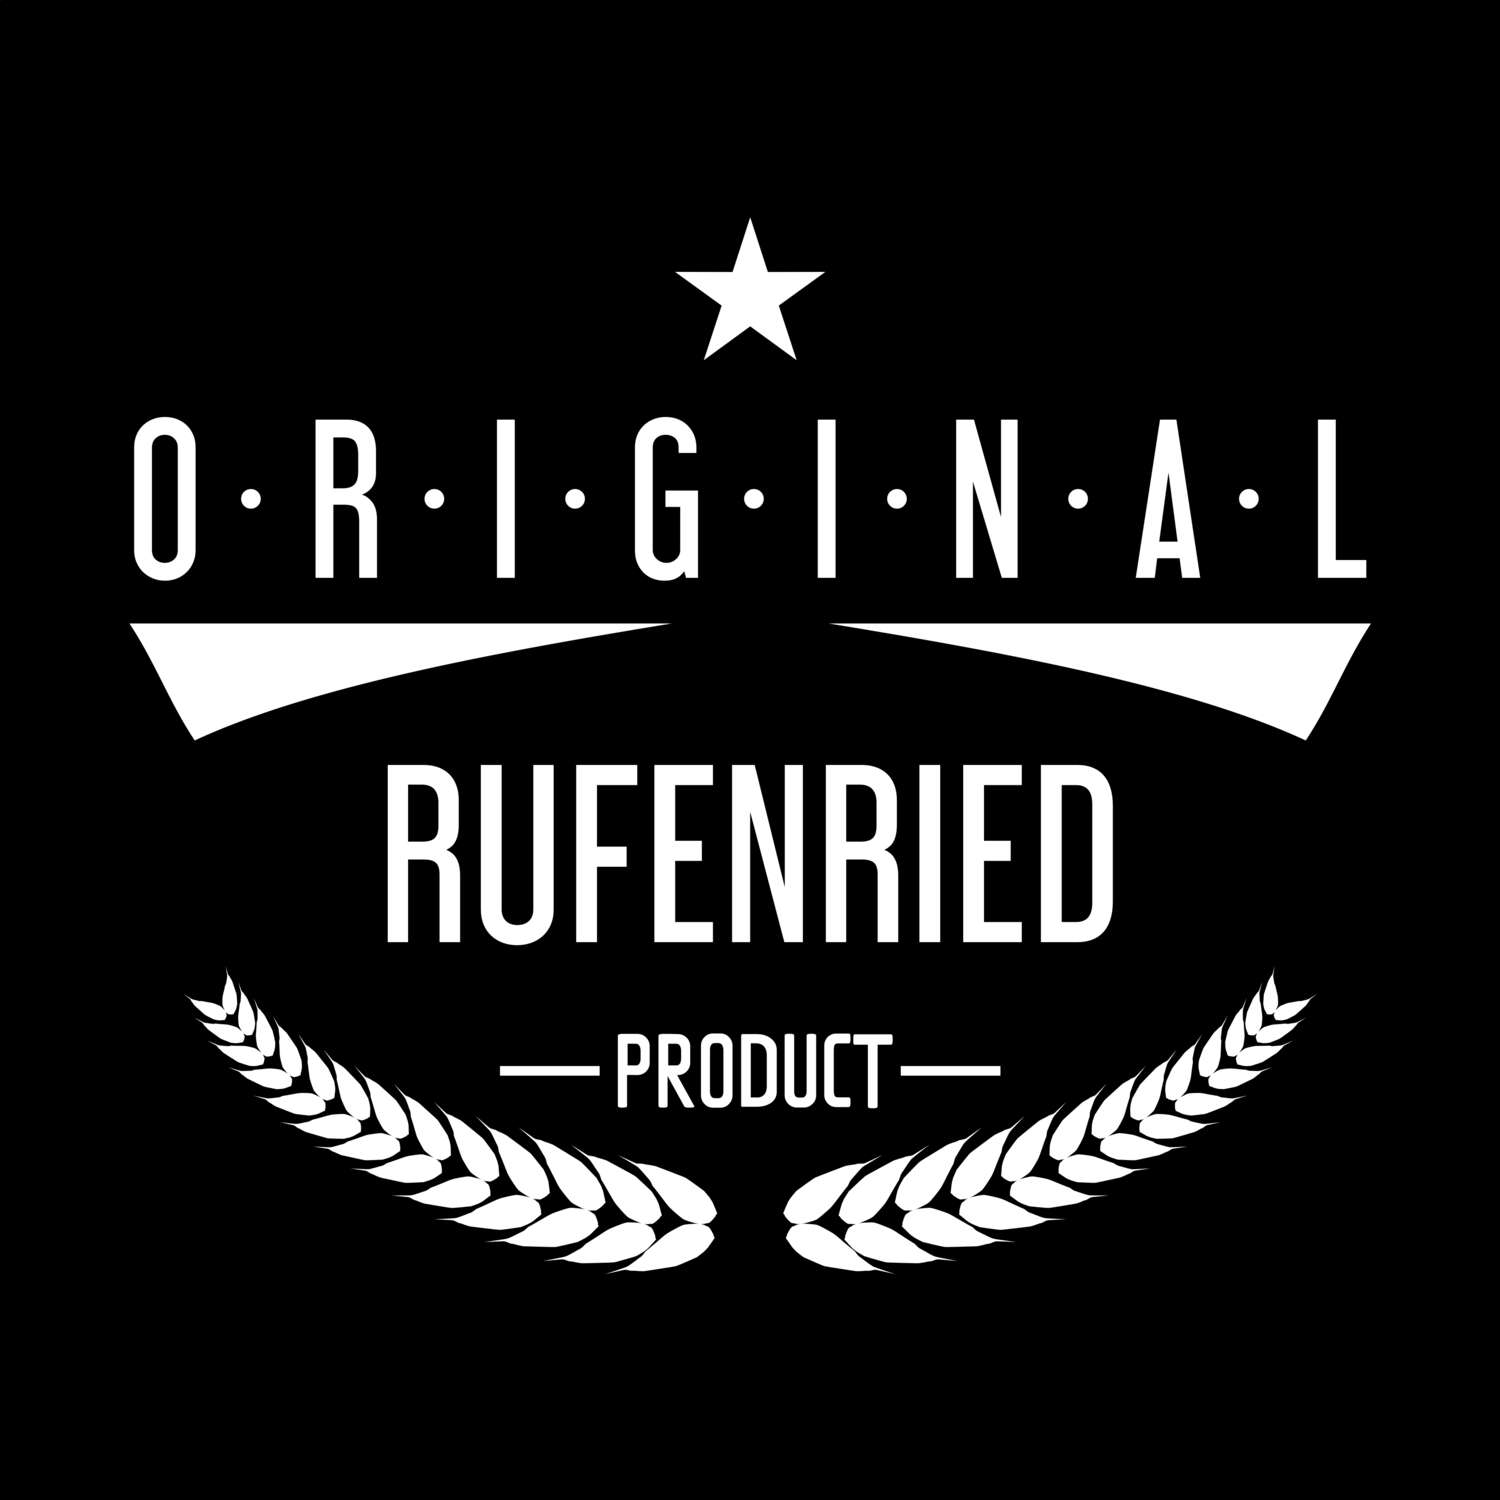 Rufenried T-Shirt »Original Product«